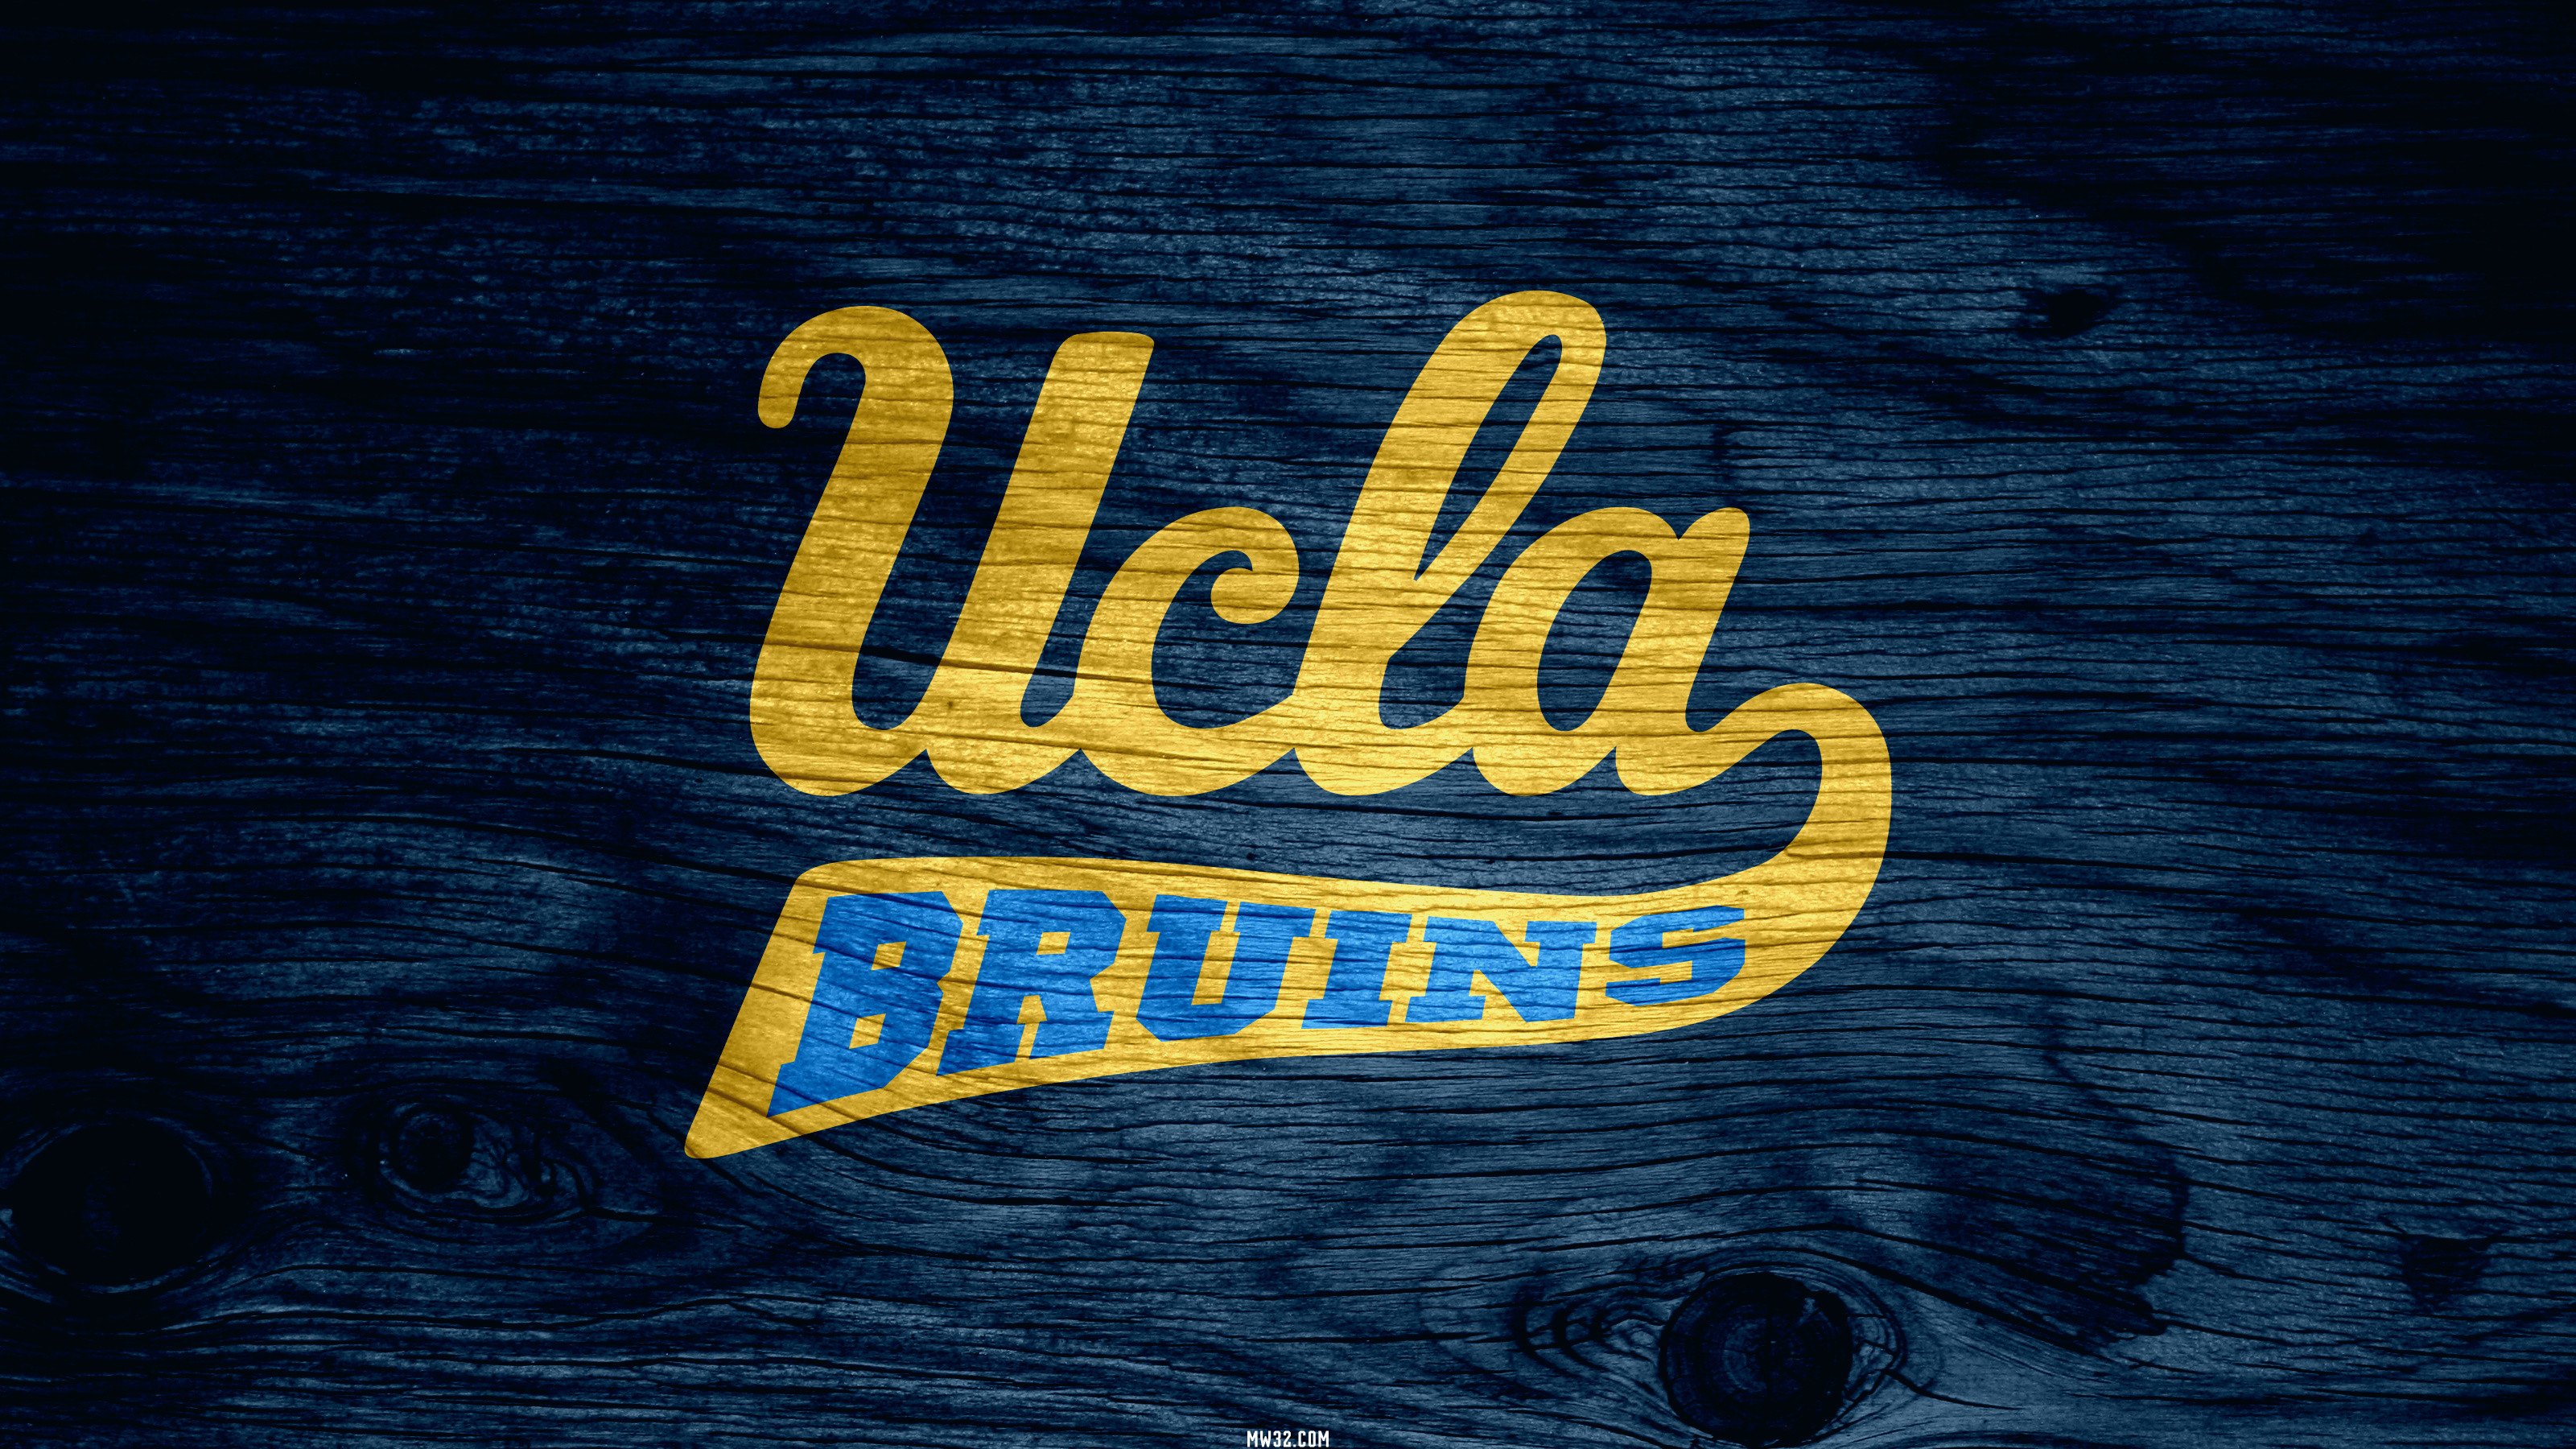 UCLA Bruins Football Player Wallpaper for Desktop Background  HD Wallpapers   Wallpapers Download  High Resolution Wallpapers  Ucla bruins football Ucla  bruins Ucla